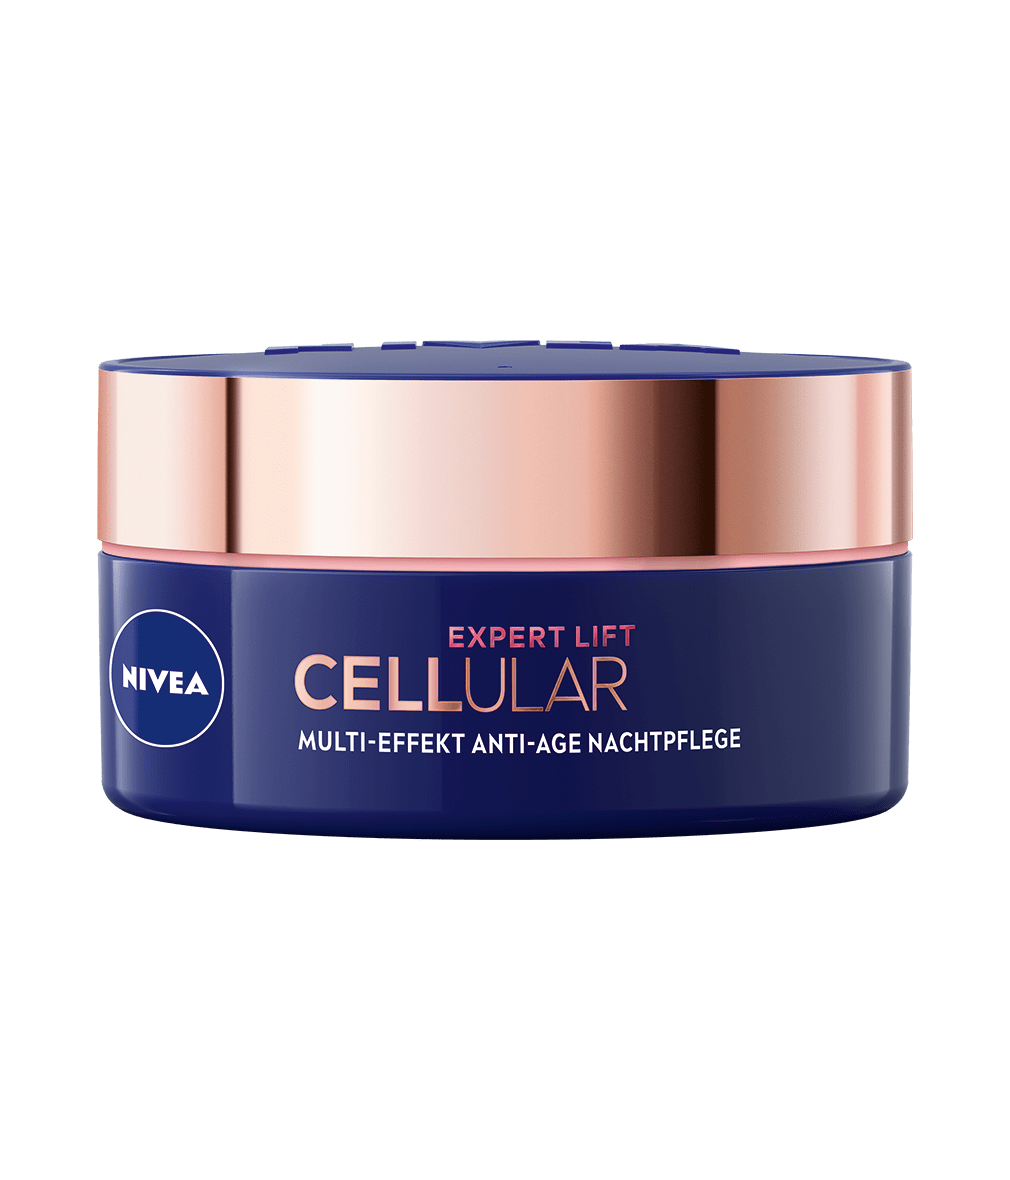 NIVEA Cellular Expert Lift Multi Effekt Anti Age Nachtpflege 50 ml